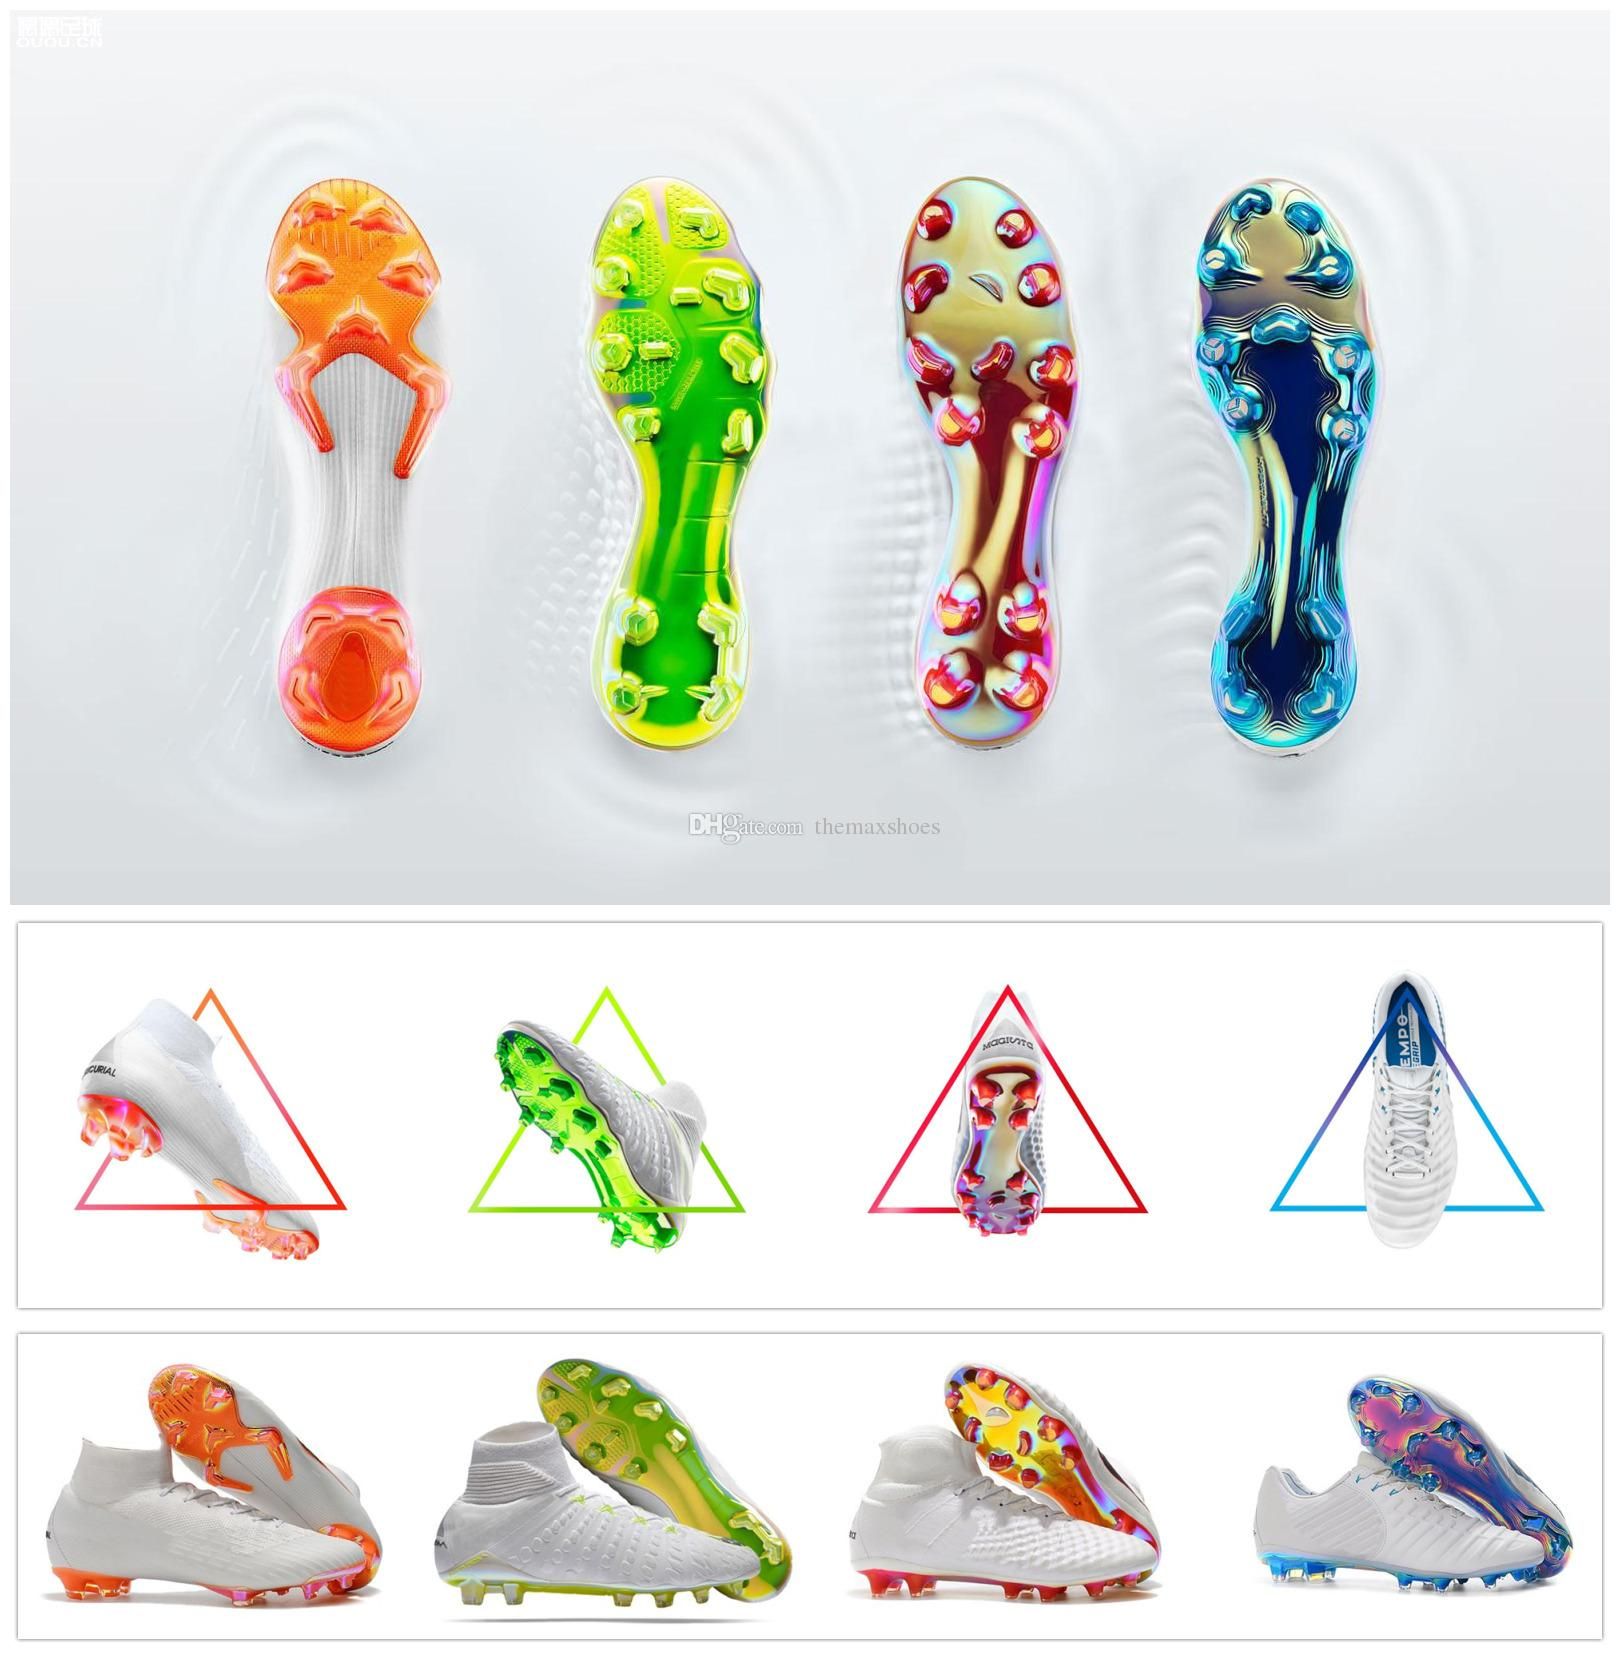 Nike Magista Obra II 2 Elite DF FG Soccer Cleats White eBay